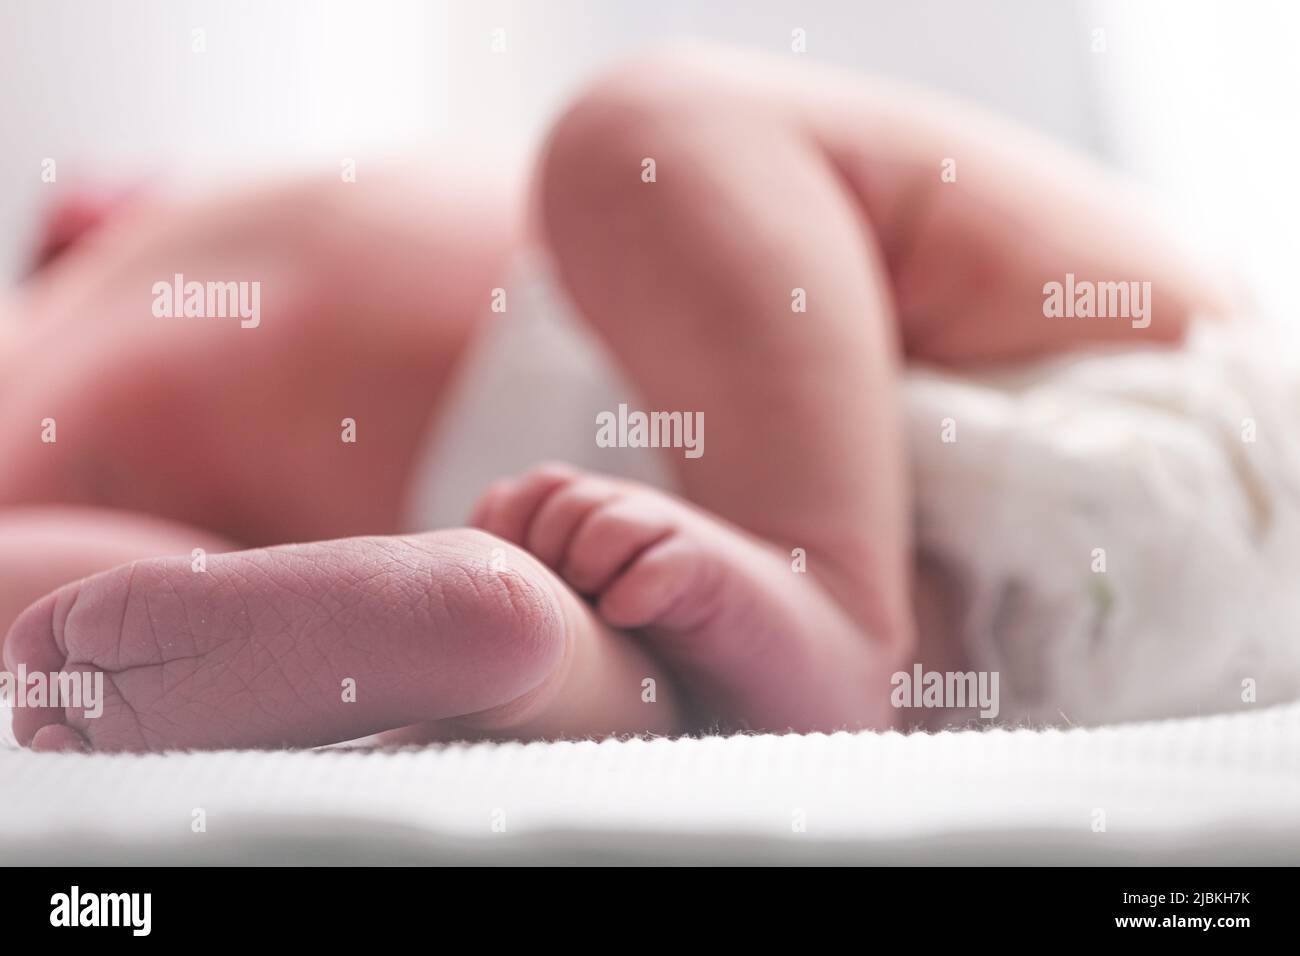 Sweet small feet of newborn baby on light blurred background. Stock Photo